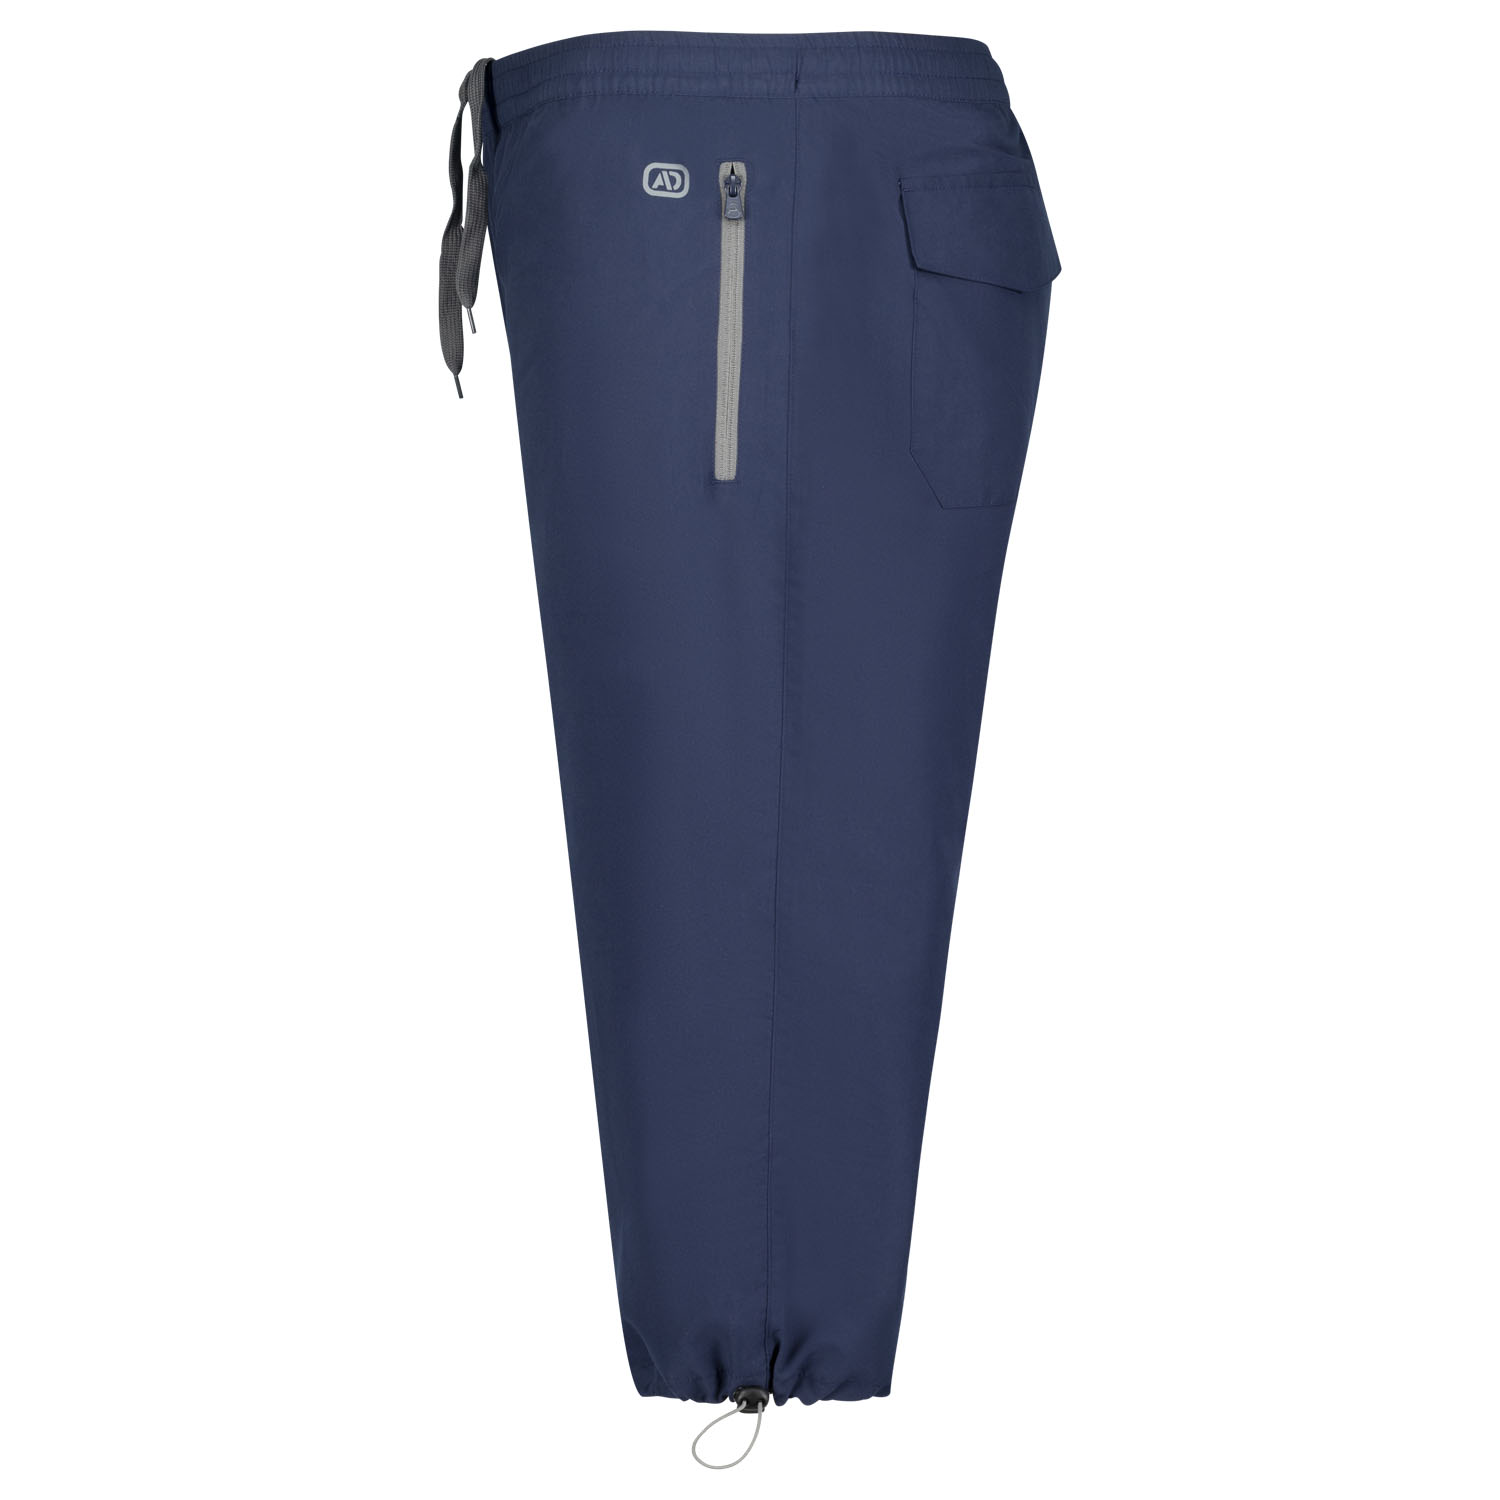 Capri pants in navy for men by Adamo series Oskar in oversizes up to 14XL